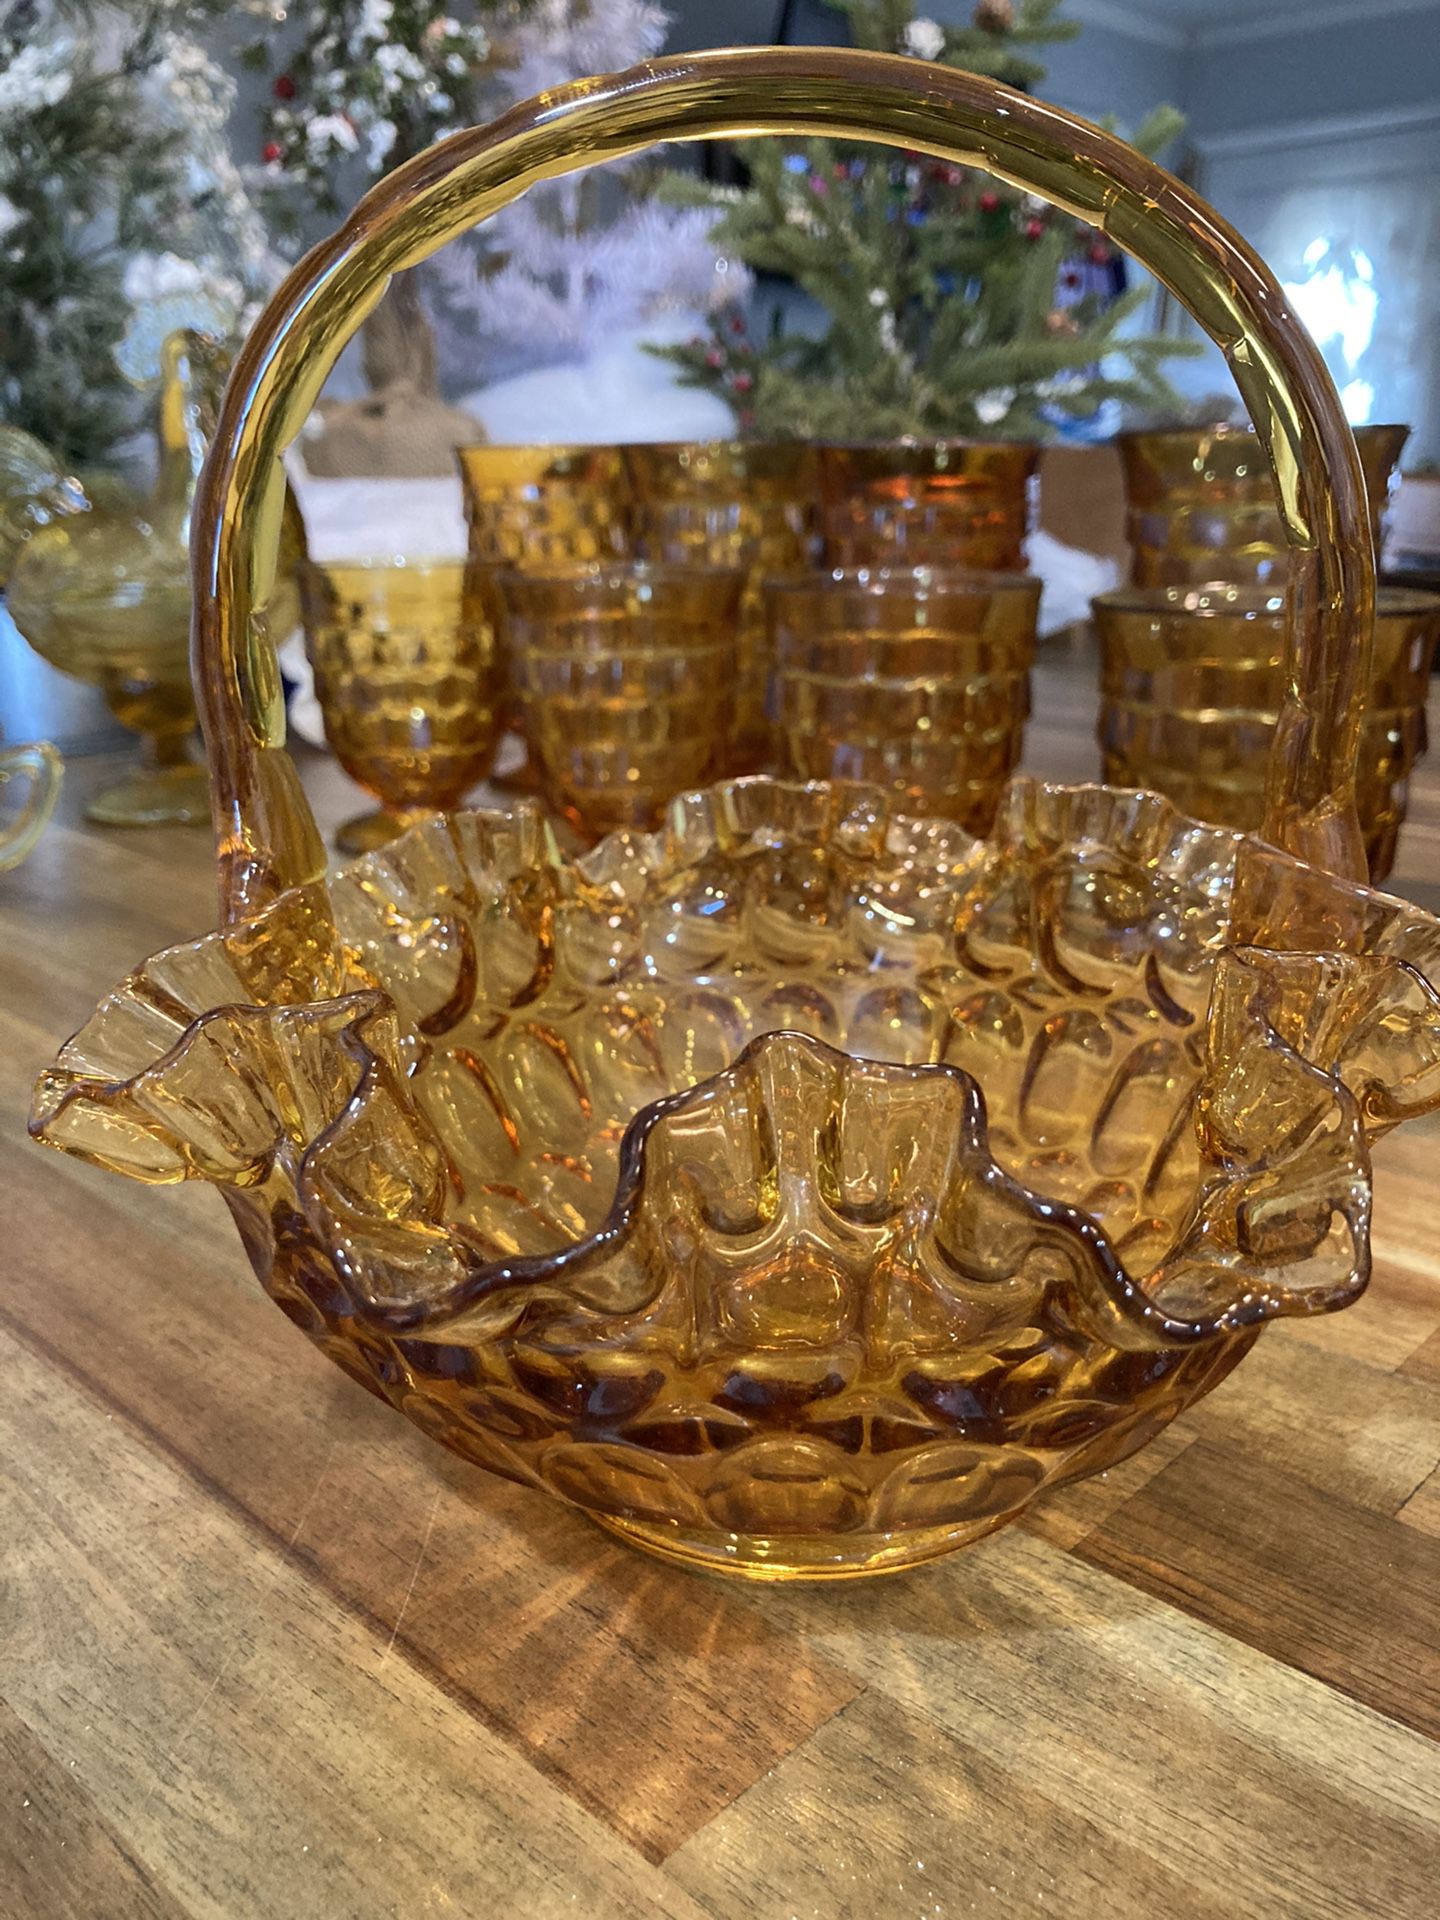 Amazing Amberware Collection